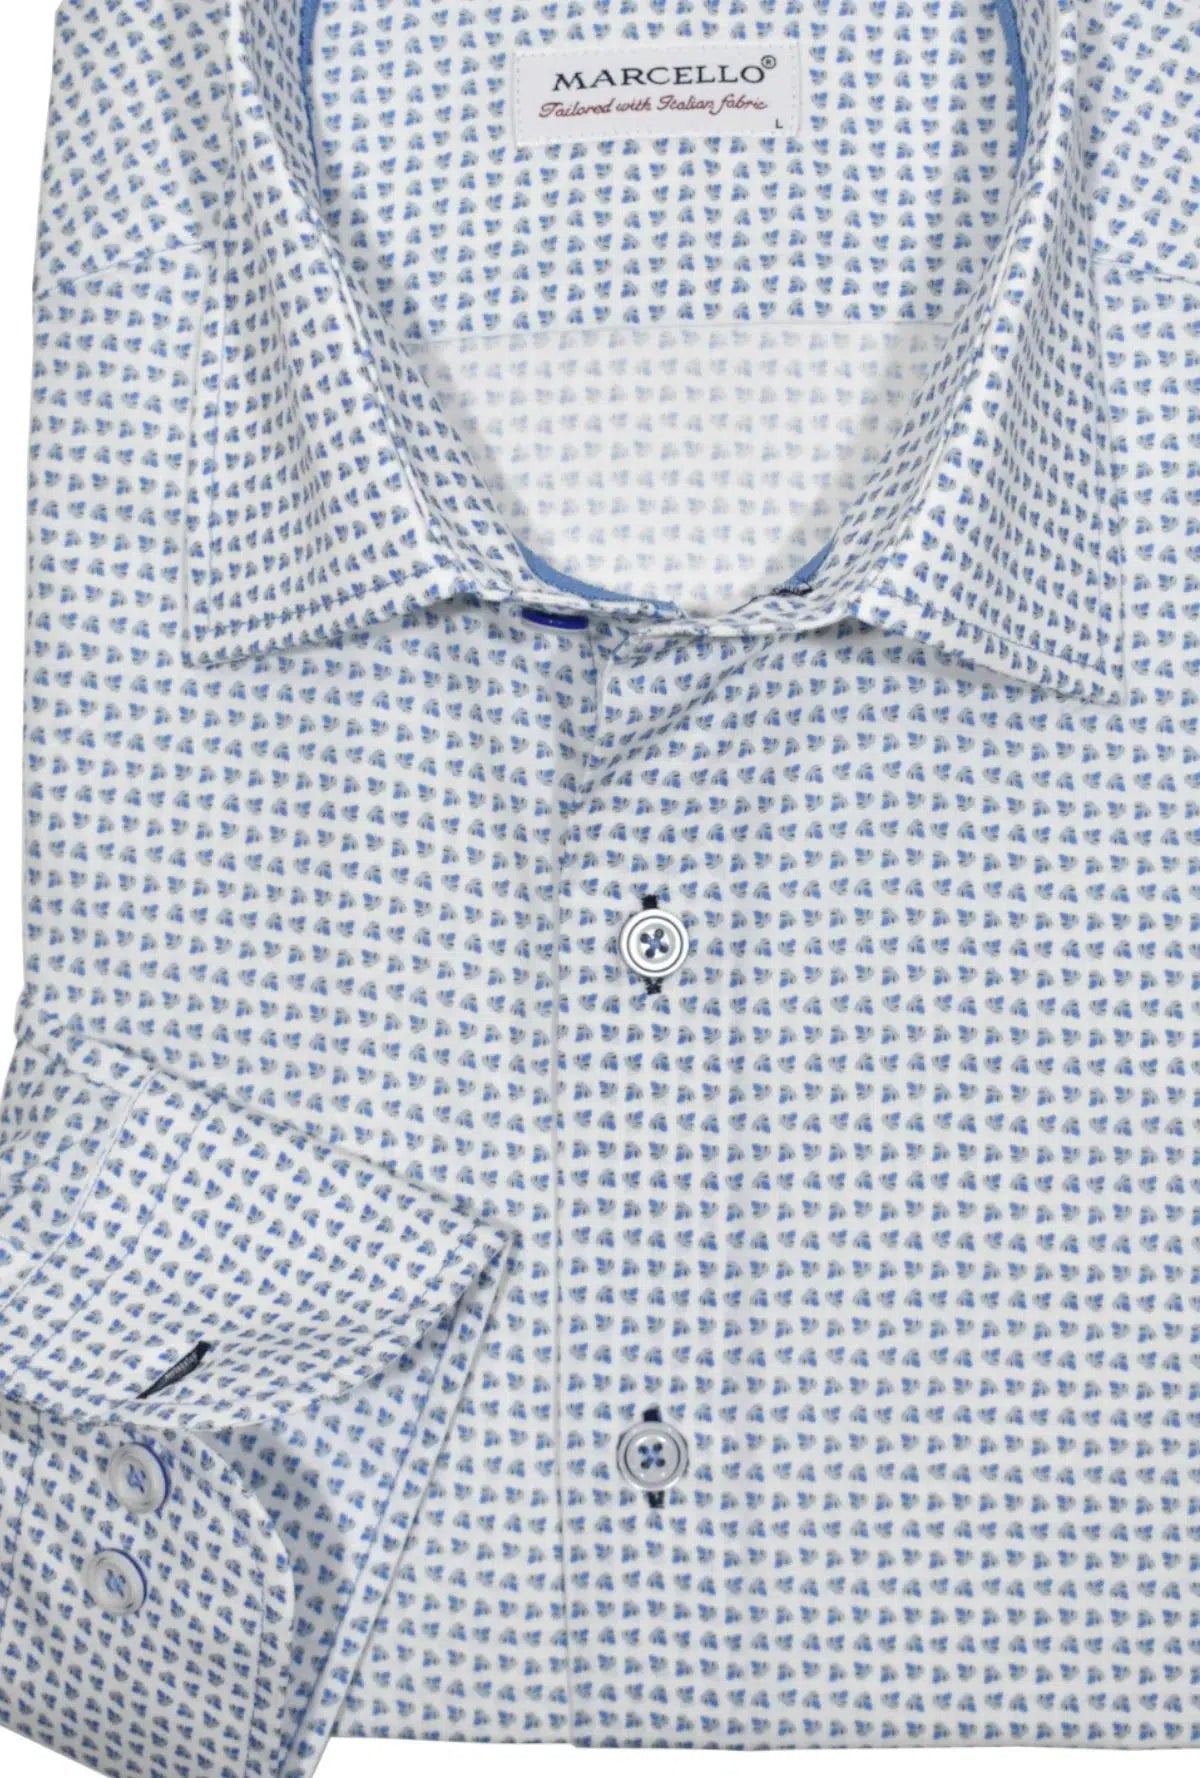 CMW7633 - Cuadra navy casual fashion cotton shirt for men-Kuet.us